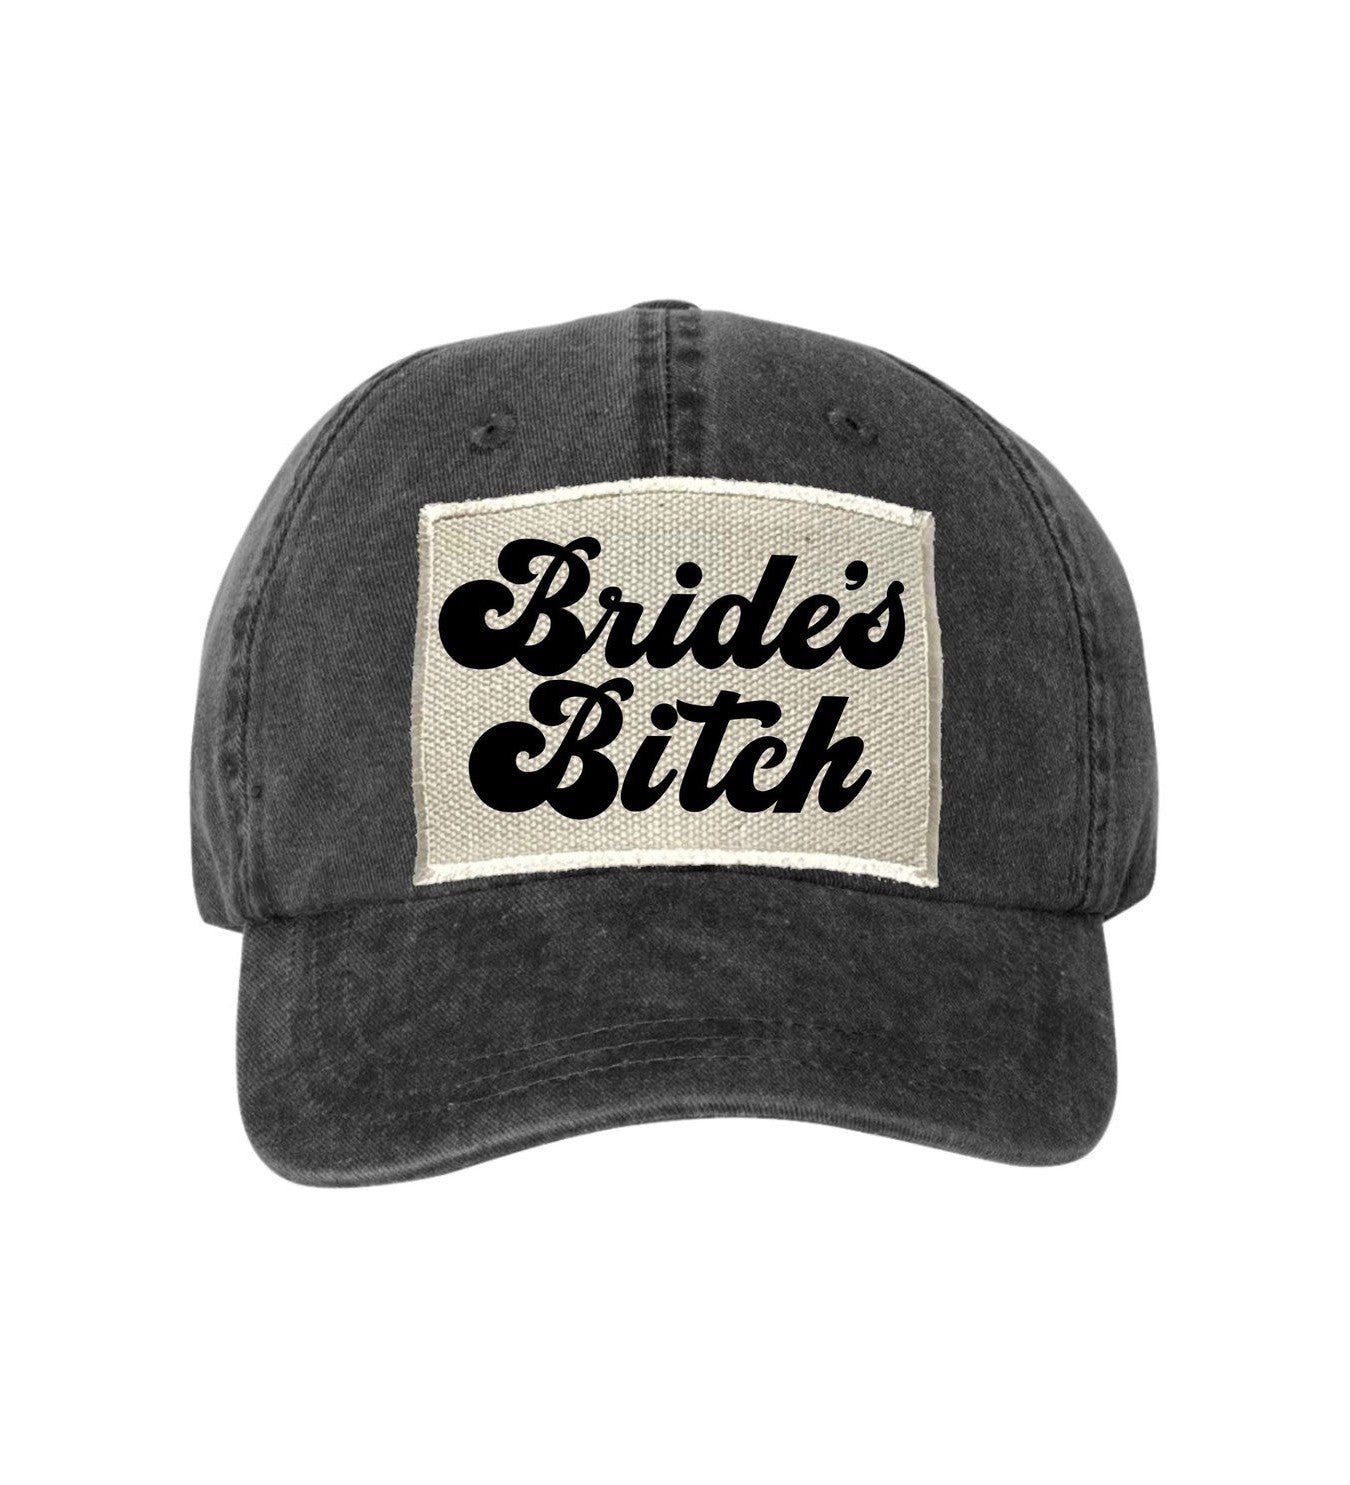 Bride's Bitch Ball Cap